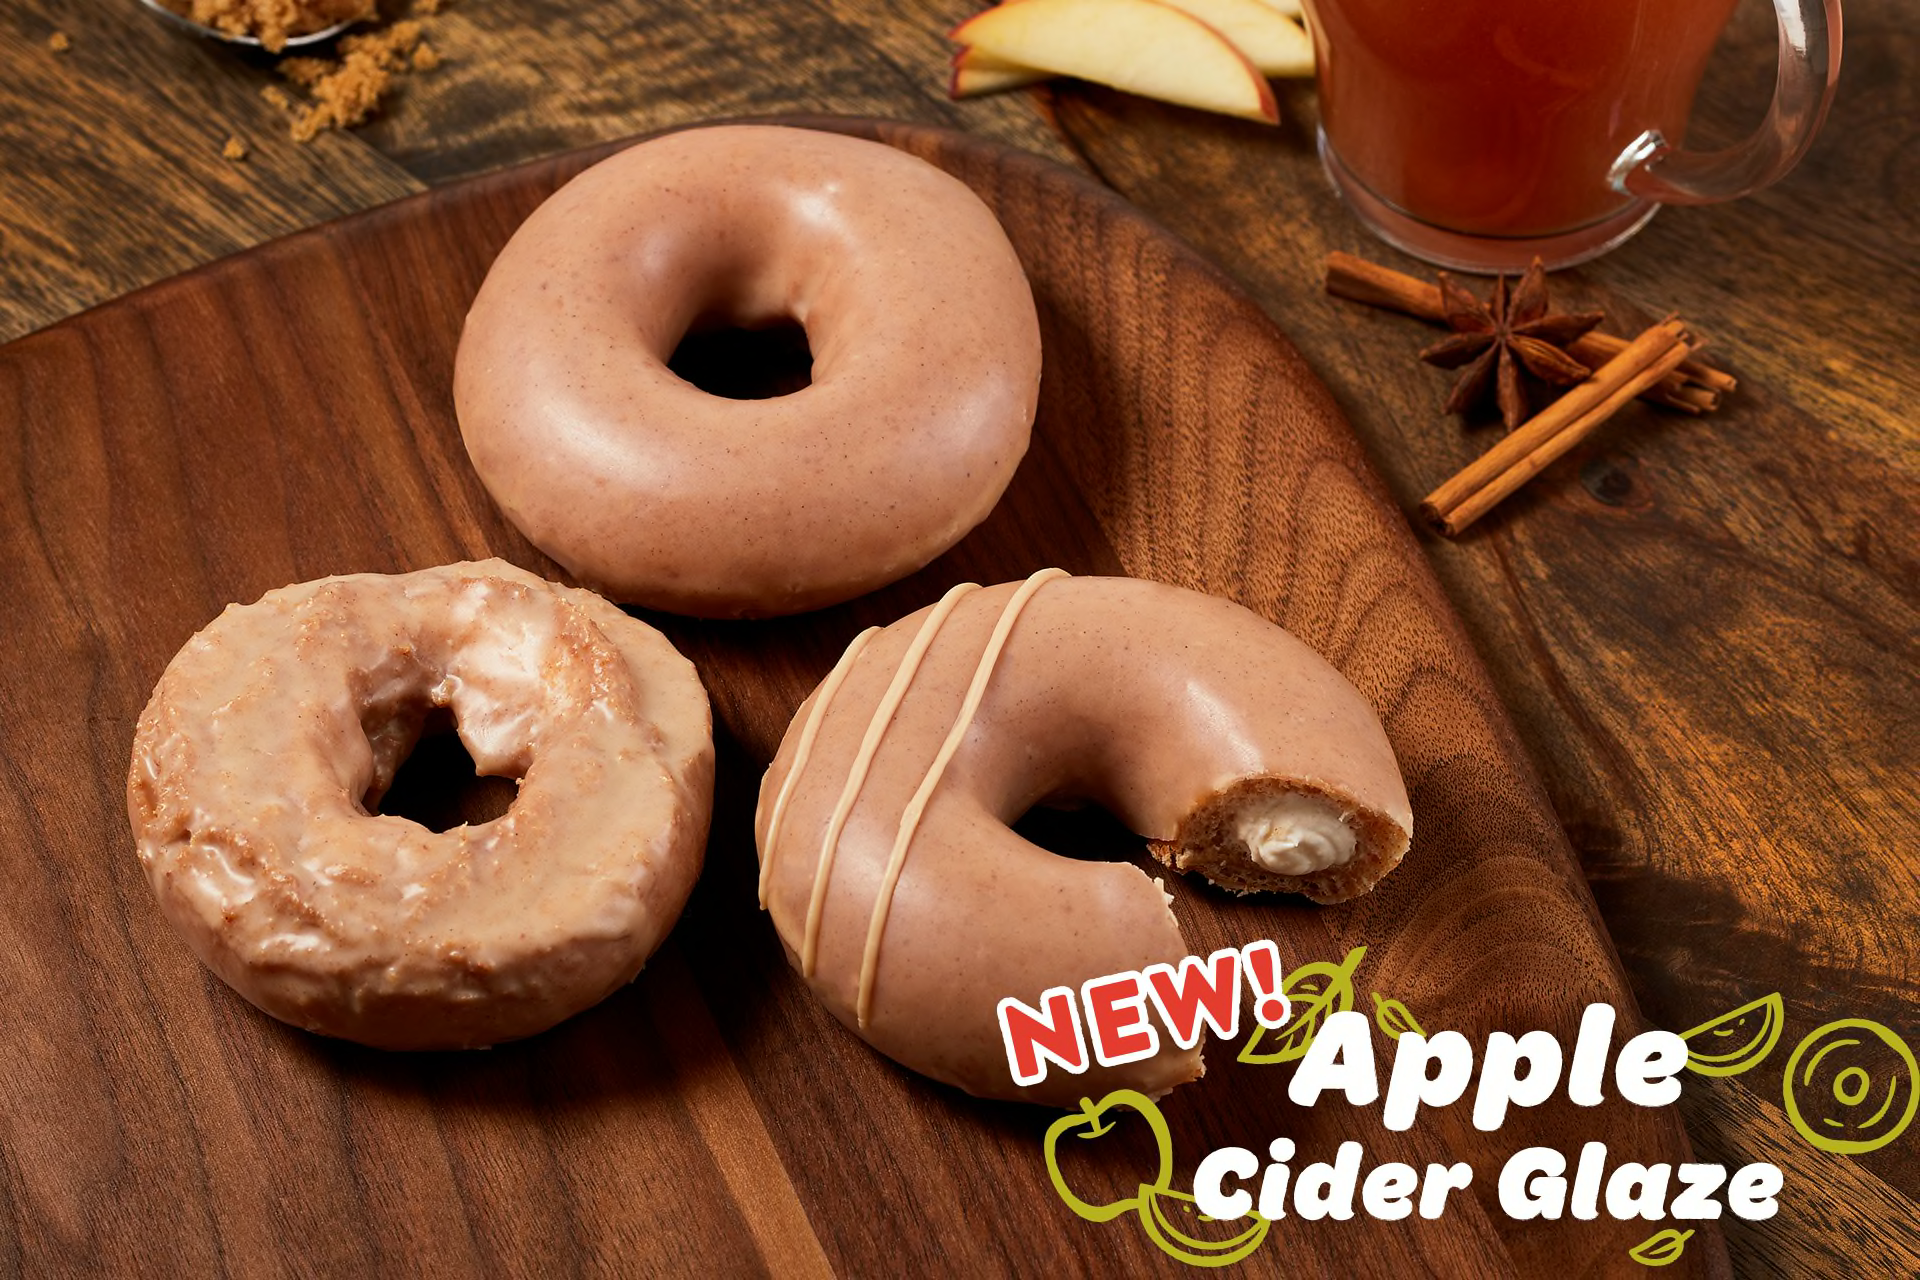 Get glazed with new Krispy Kreme fall flavor doughnuts